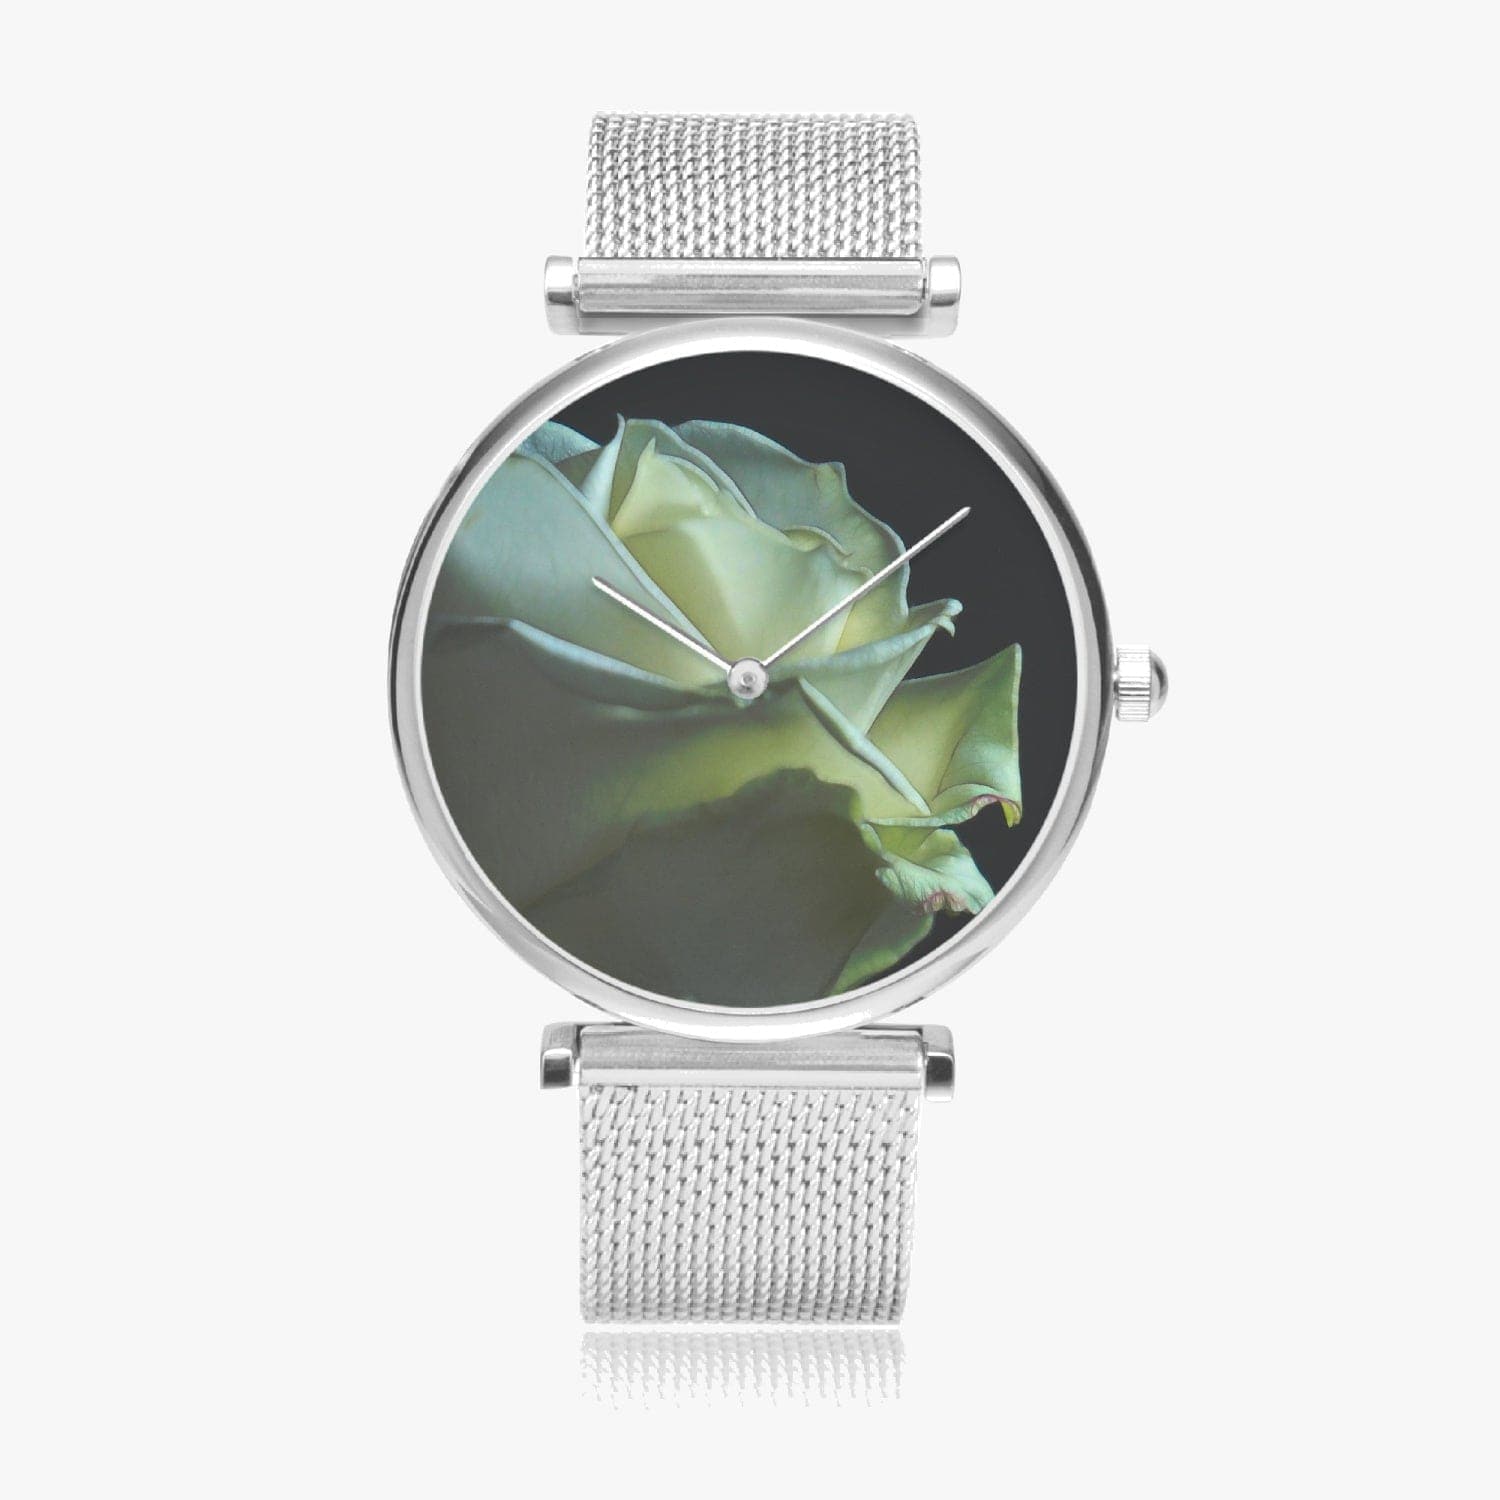 Tender white rose. New Stylish Ultra-Thin Quartz Watch, by Ingrid Hütten